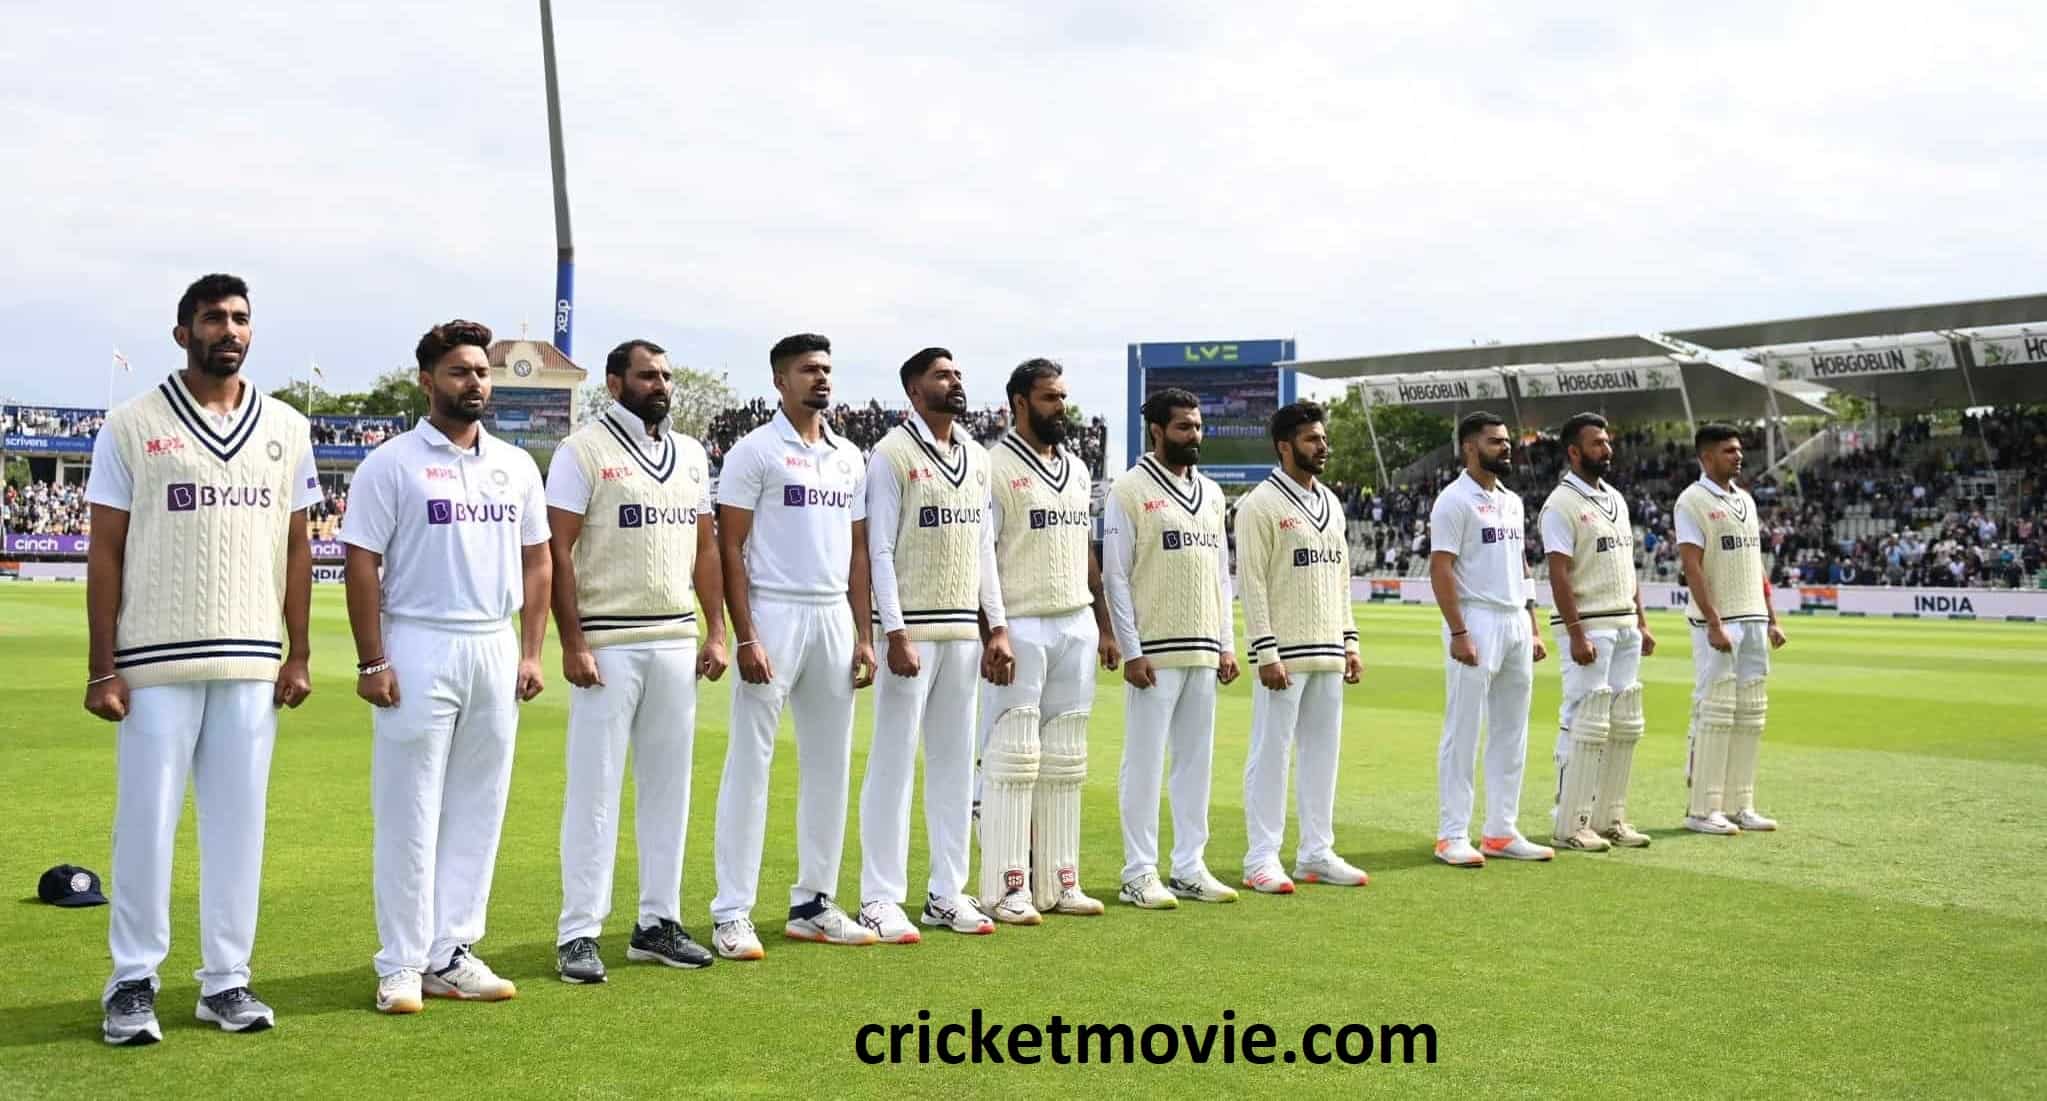 England won 5th Test against India-cricketmovie.com